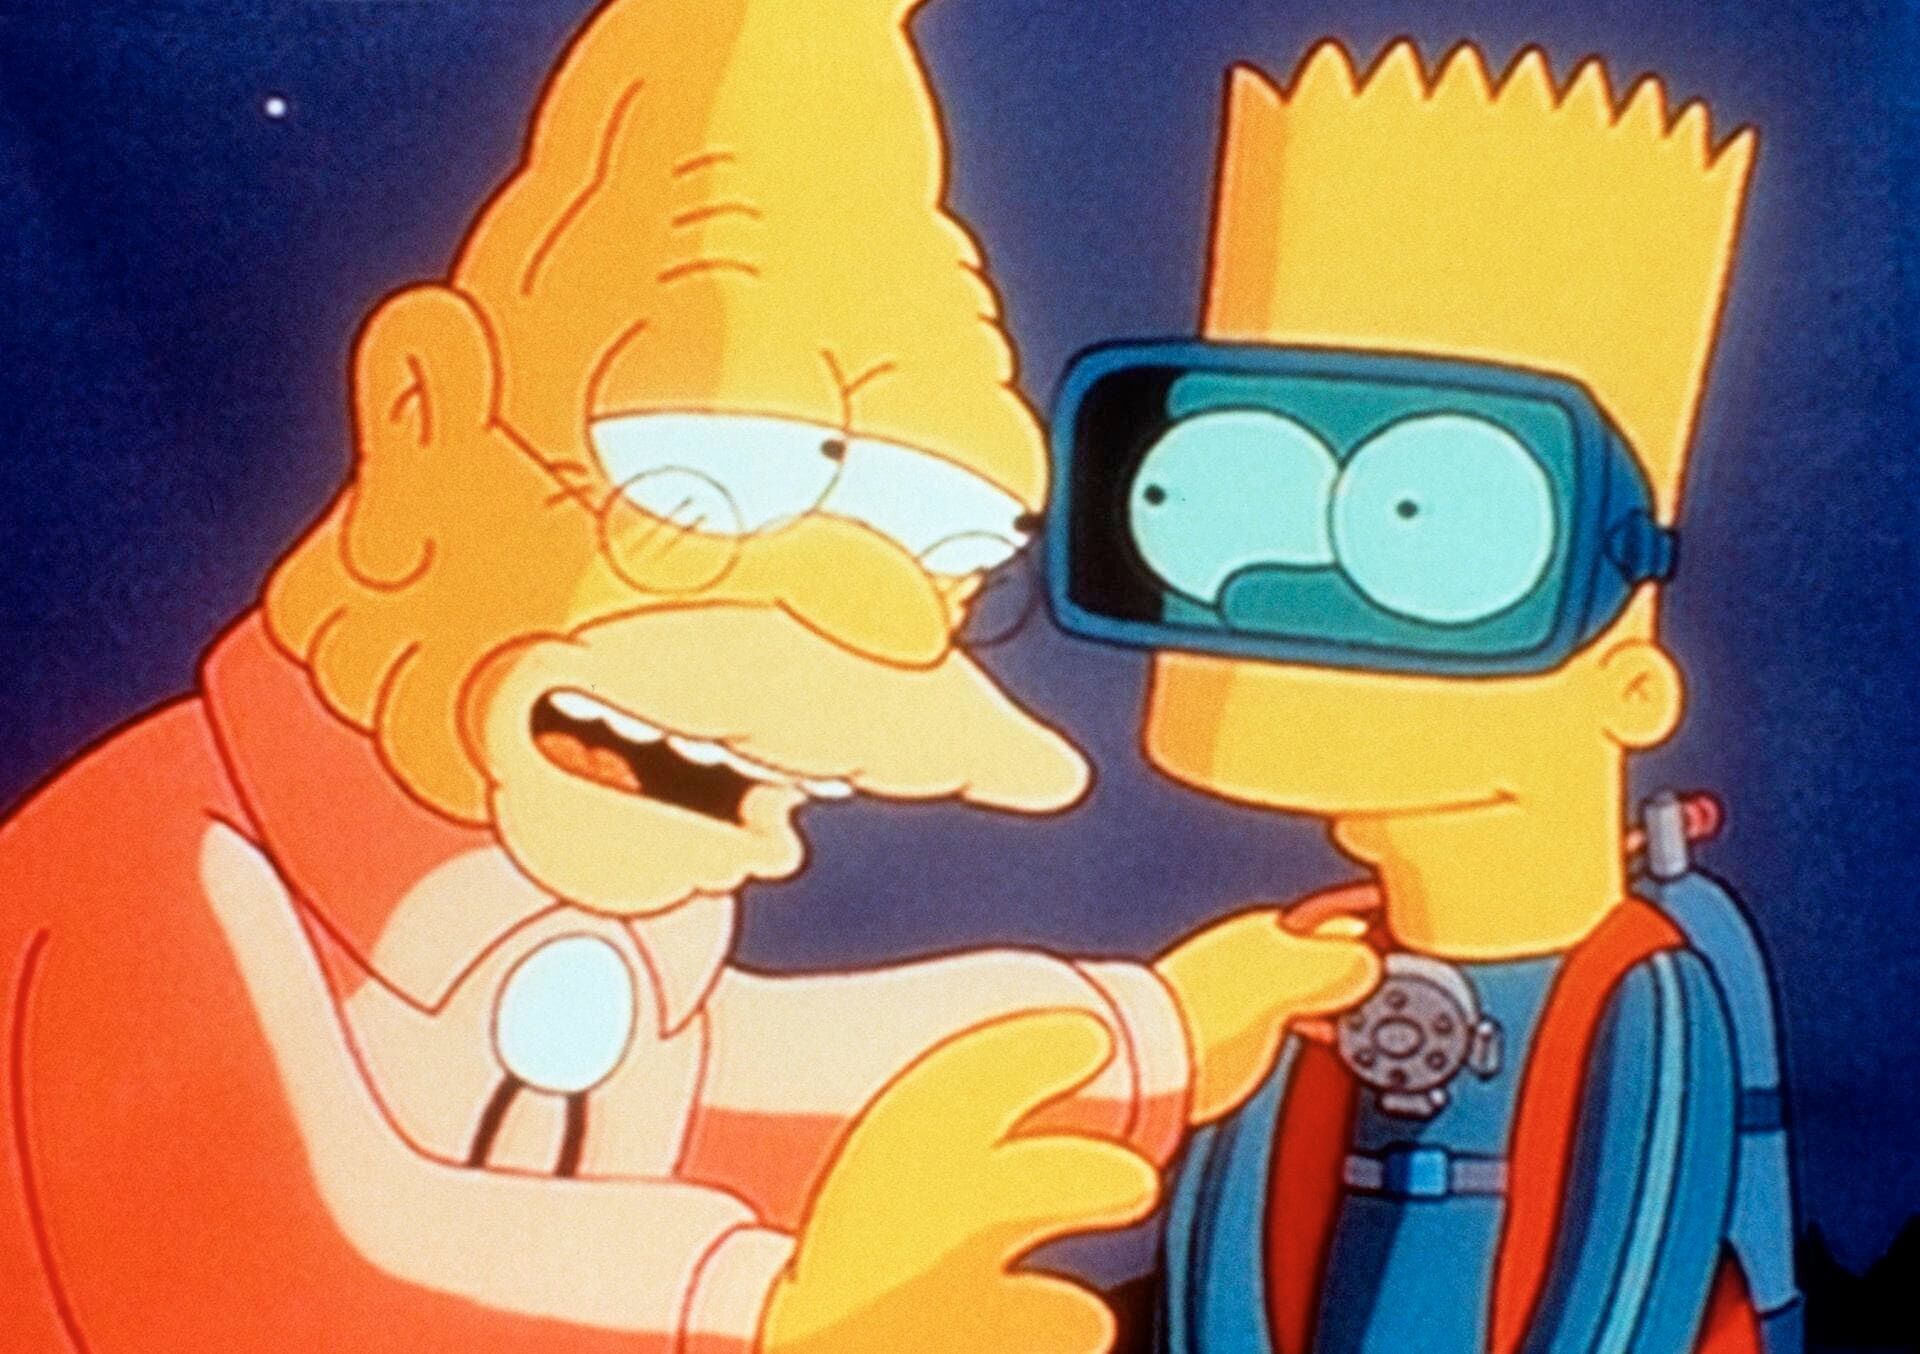 Les Simpson - Homer contre New York